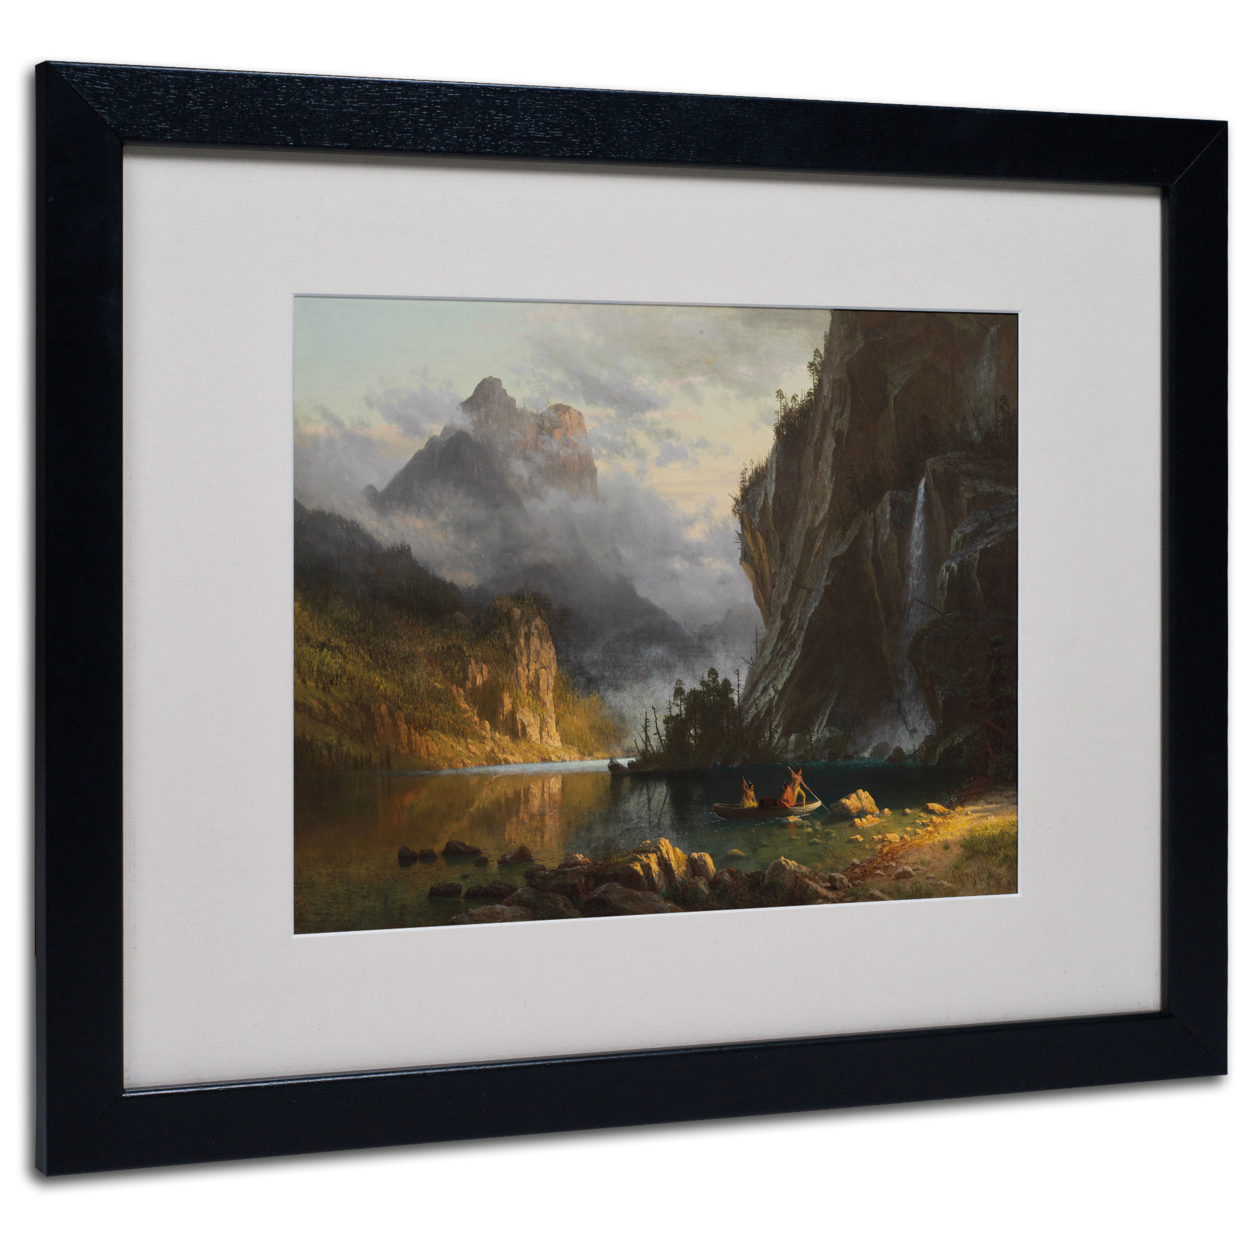 Albert Bierstadt 'Indians Spear Fishing' Black Wooden Framed Art 18 X 22 Inches